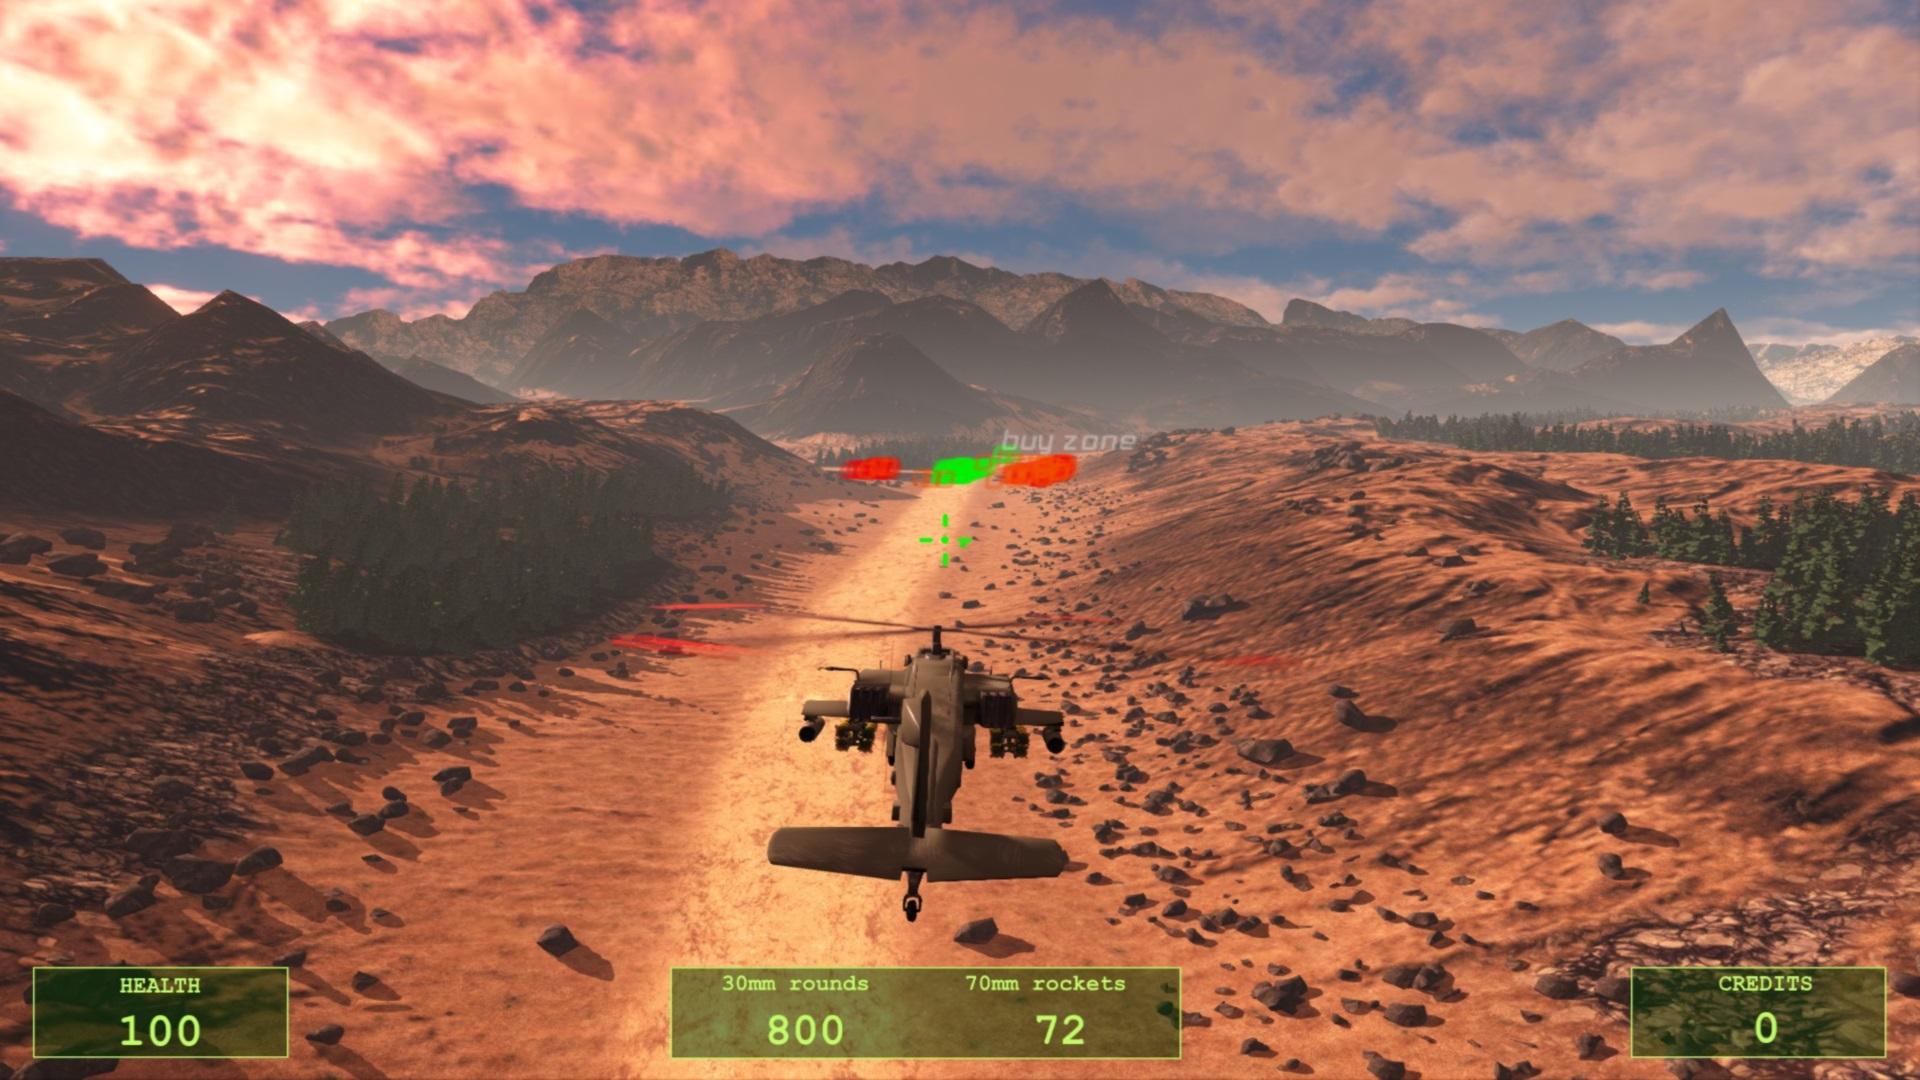 Screenshot №4 from game Aerial Destruction